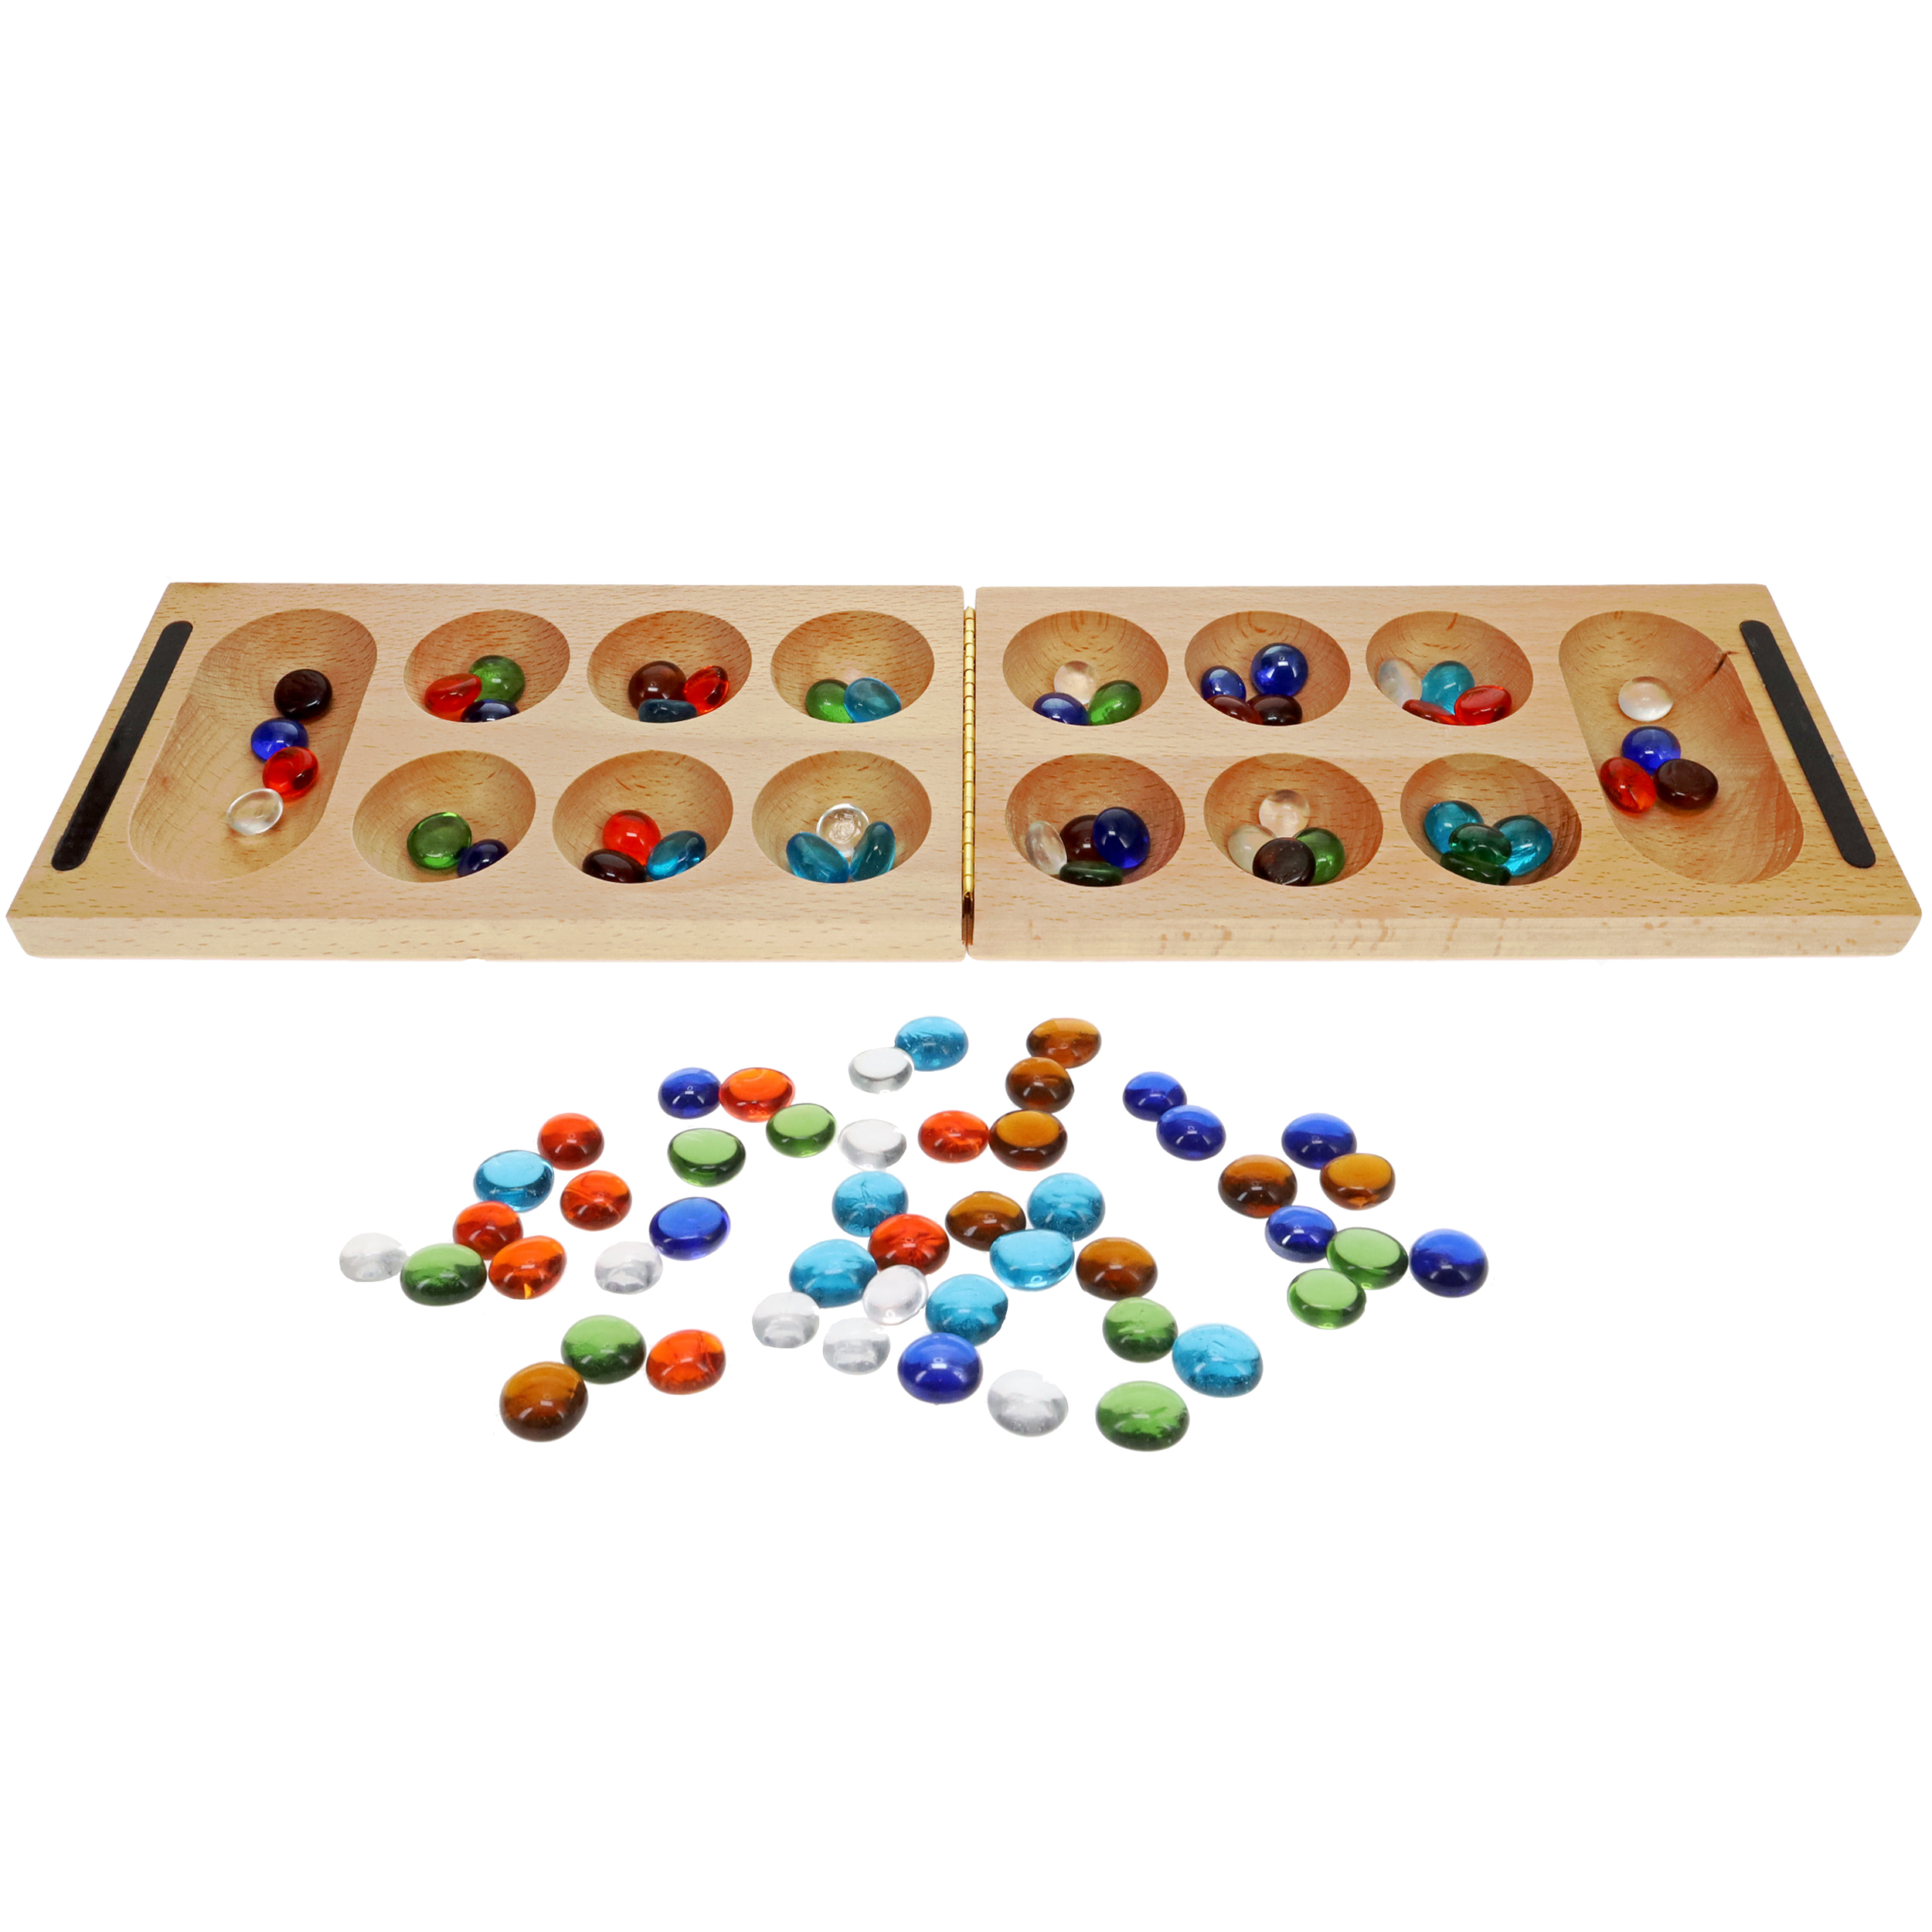 WE Games Folding Mancala - Solid Wood Board & Glass Stones